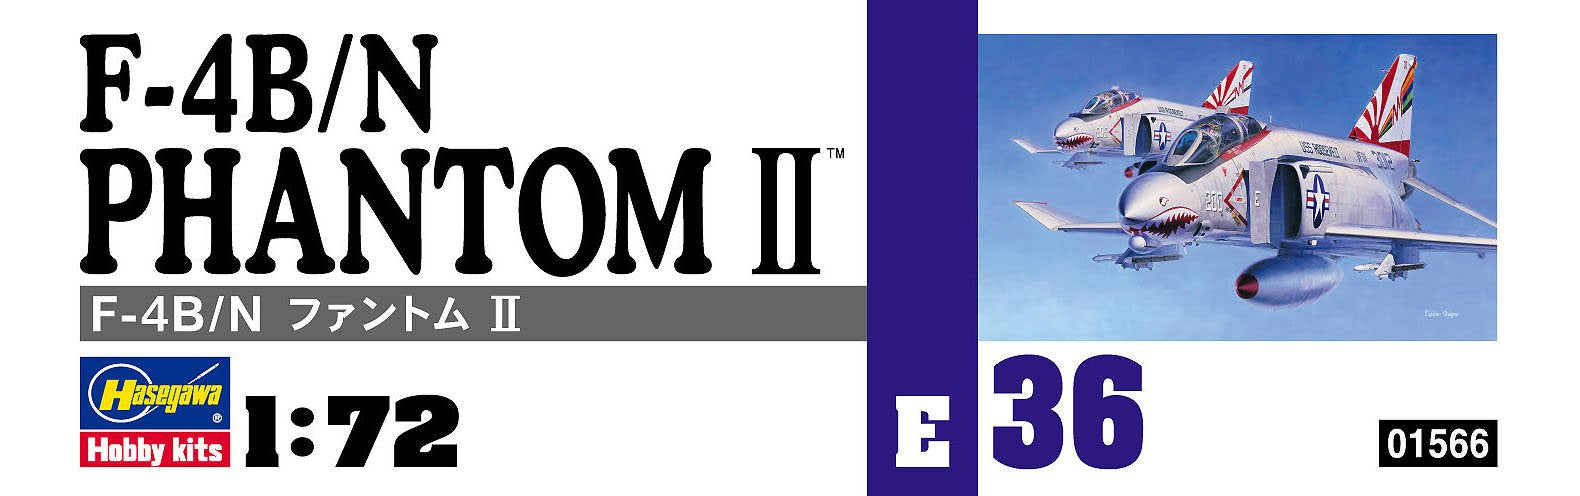 Kit HASEGAWA E36 F-4B/N Phantom II à l'échelle 1/72